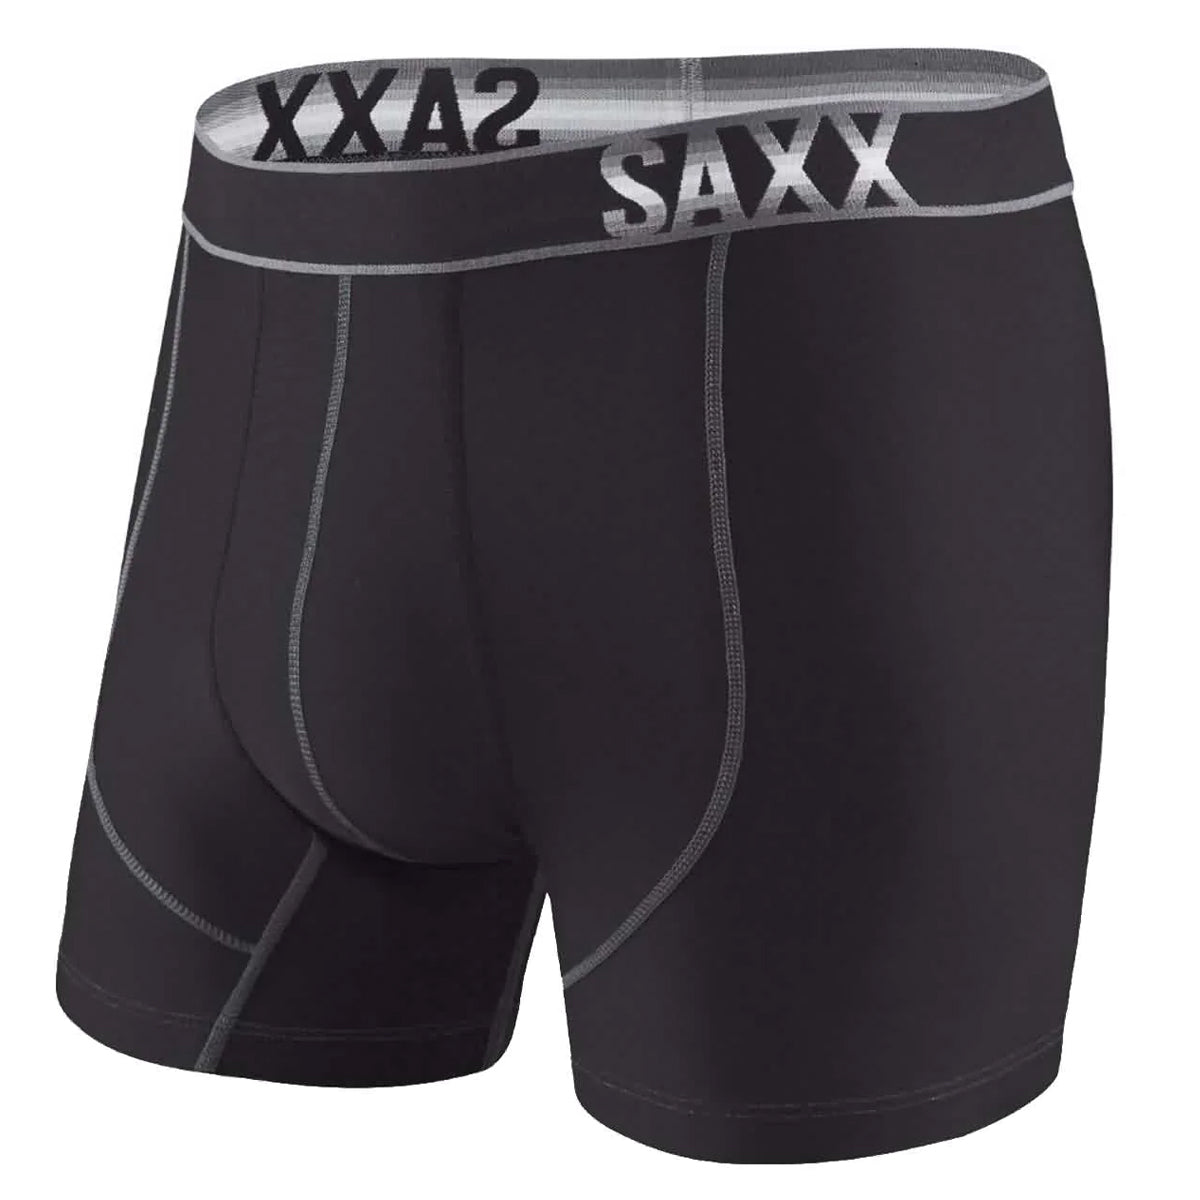 Saxx Impact Boxer Men's Bottom Underwear 